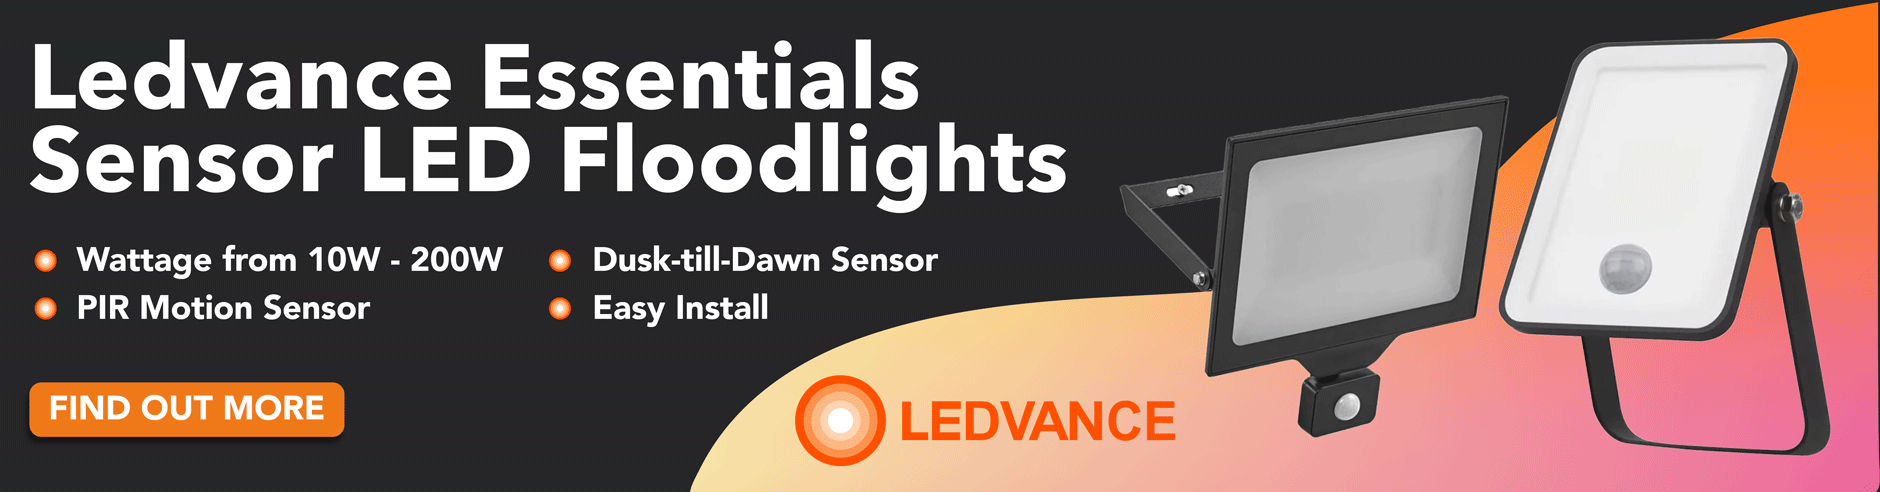 Ledvance Essentials LED Floodlights